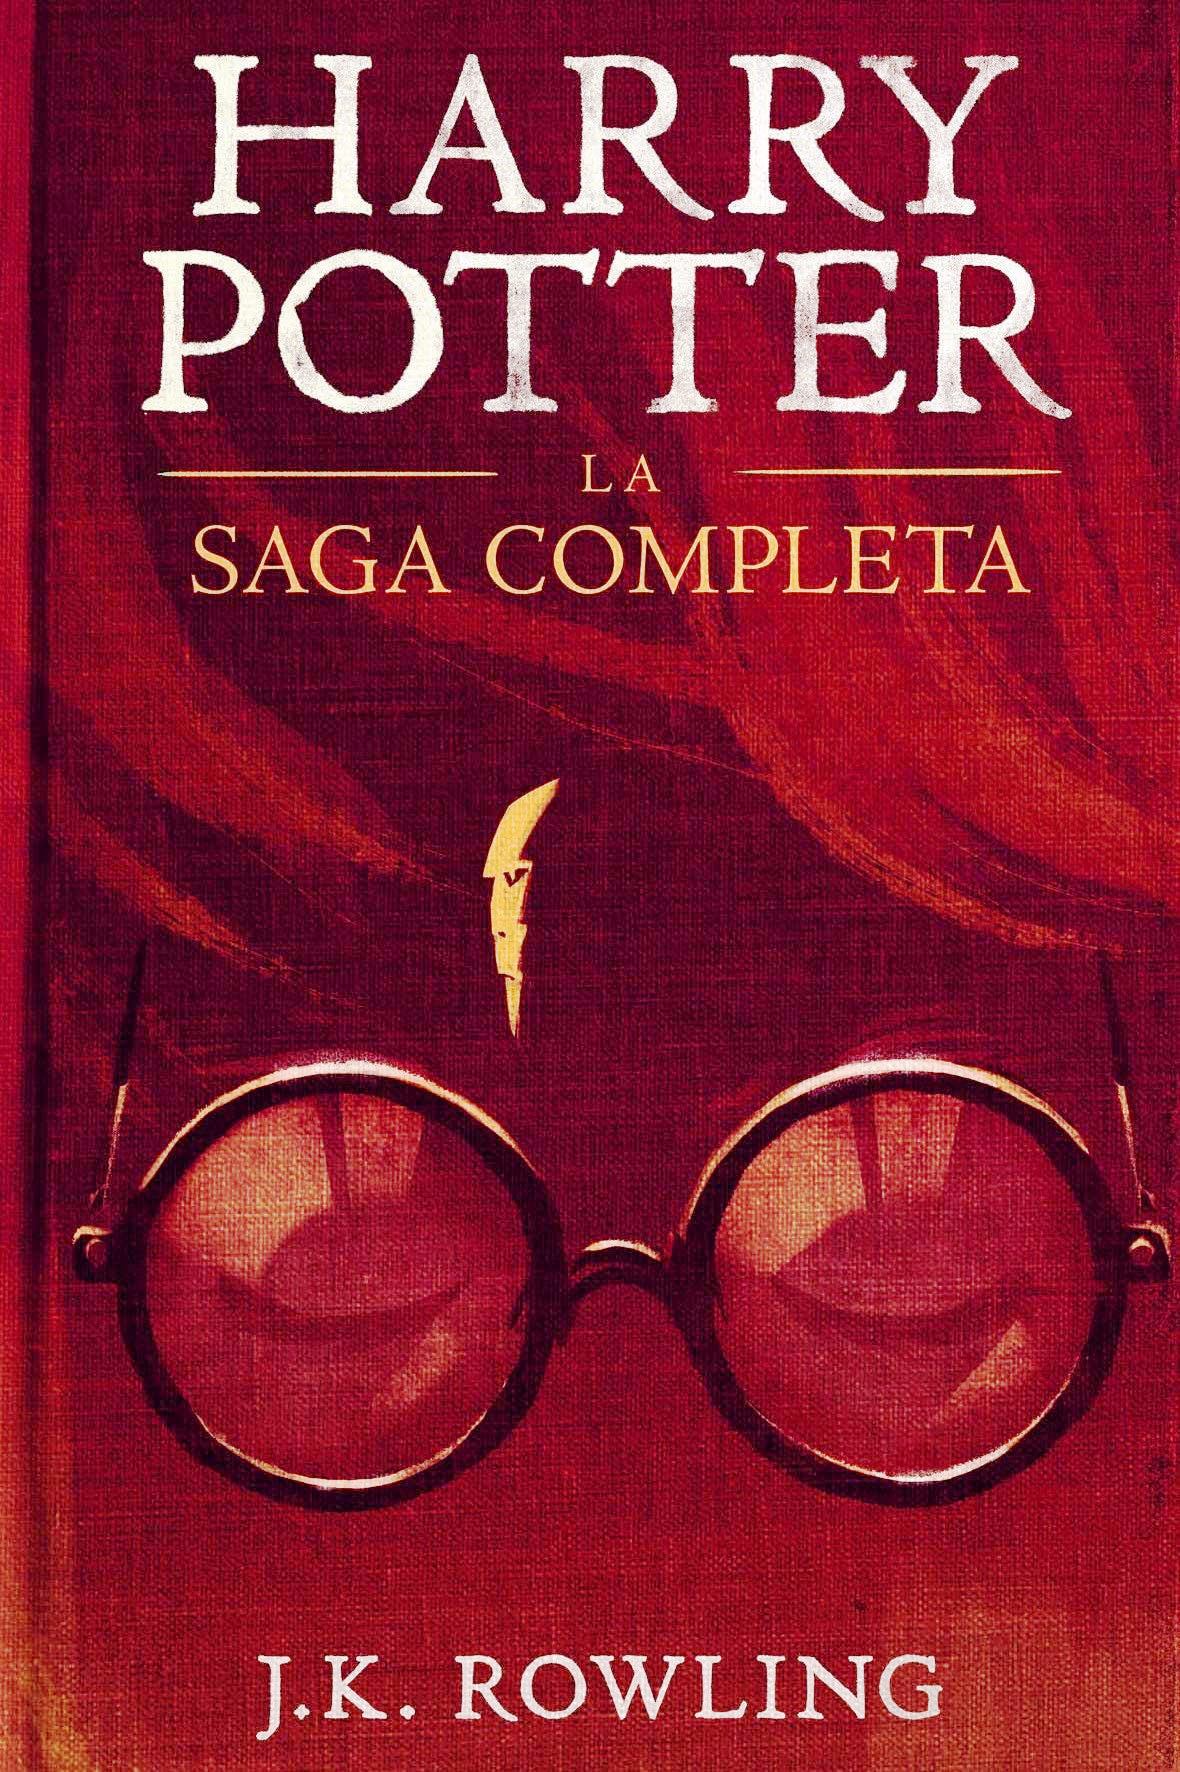 [Italian HP 1 - 7] Harry Potter Audiolibro: La Saga Completa